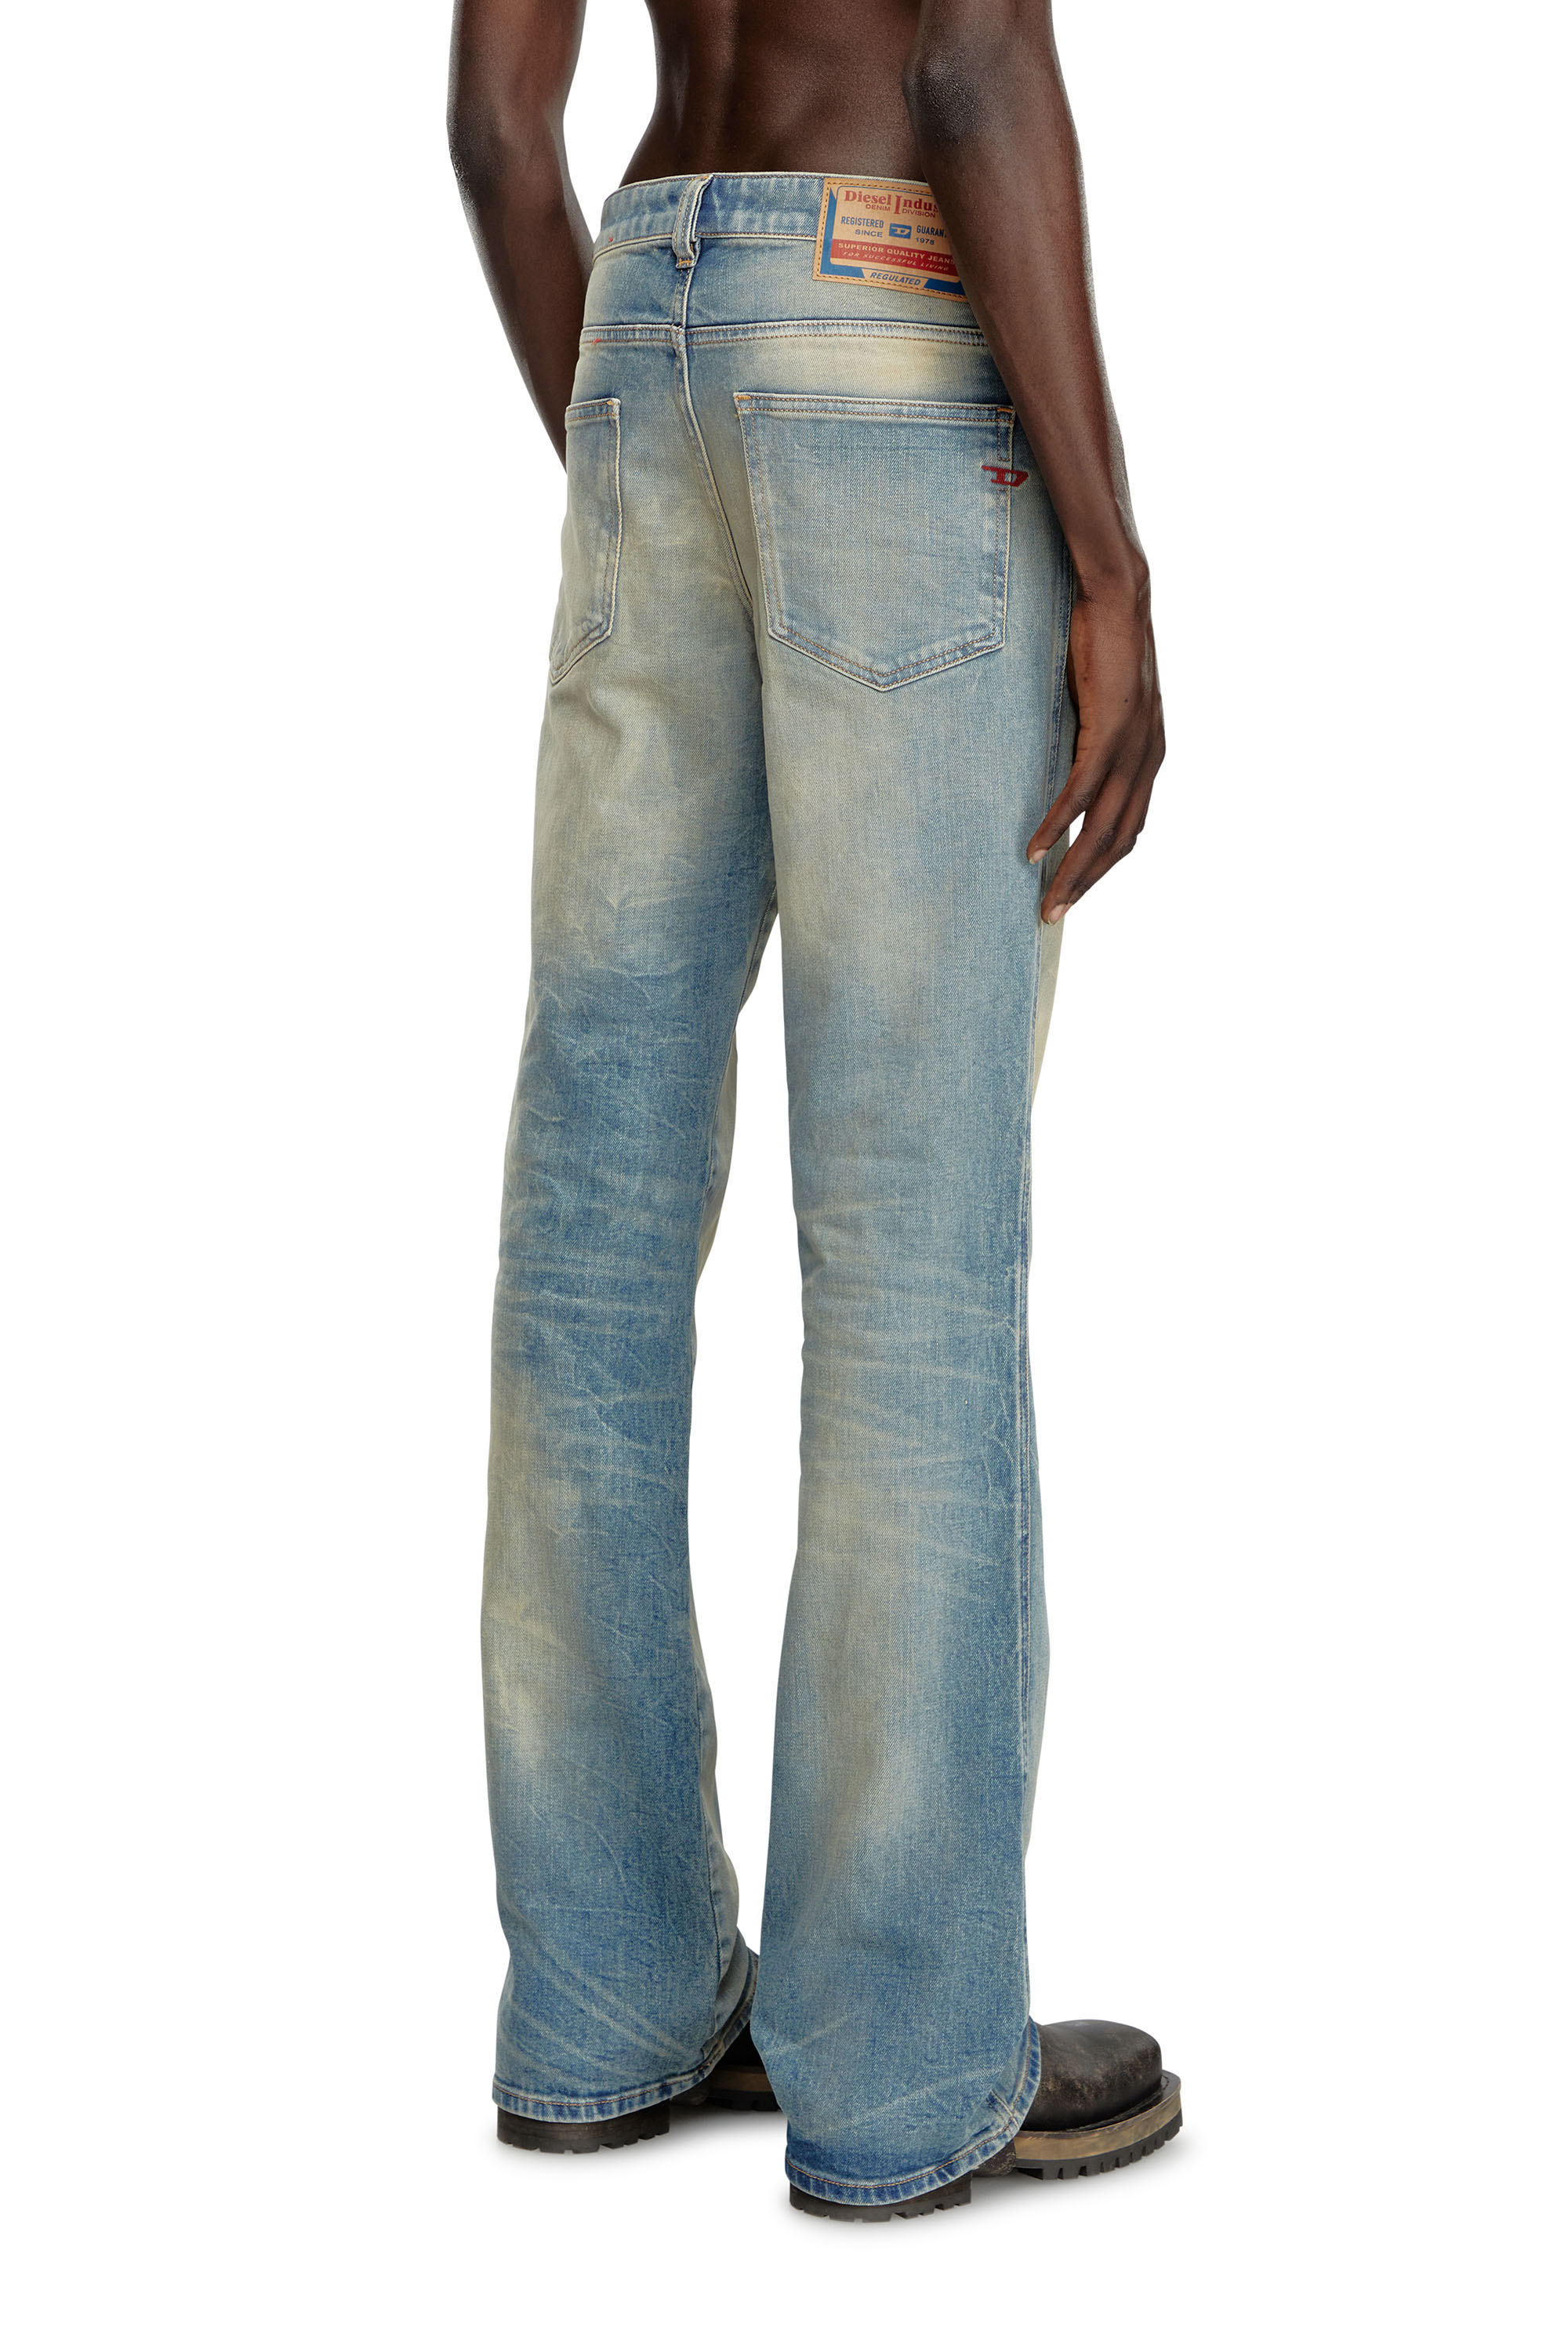 Diesel - Bootcut Jeans 1998 D-Buck 09H78, Hombre Bootcut Jeans - 1998 D-Buck in Azul marino - Image 3